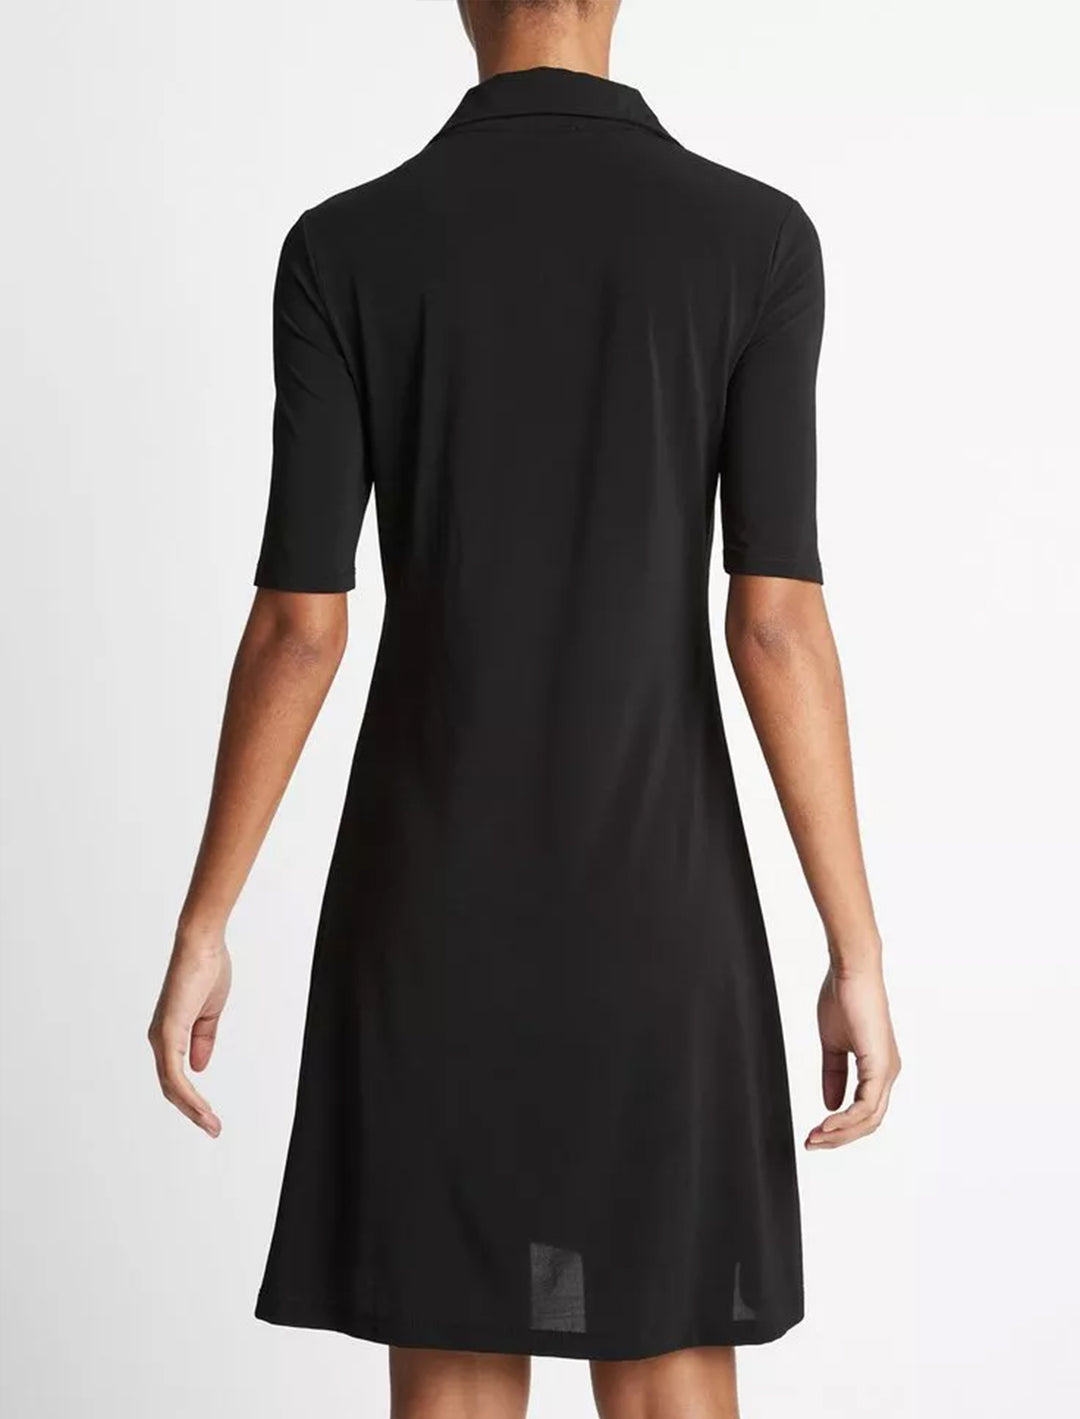 elbow sleeve polo dress in black (3)